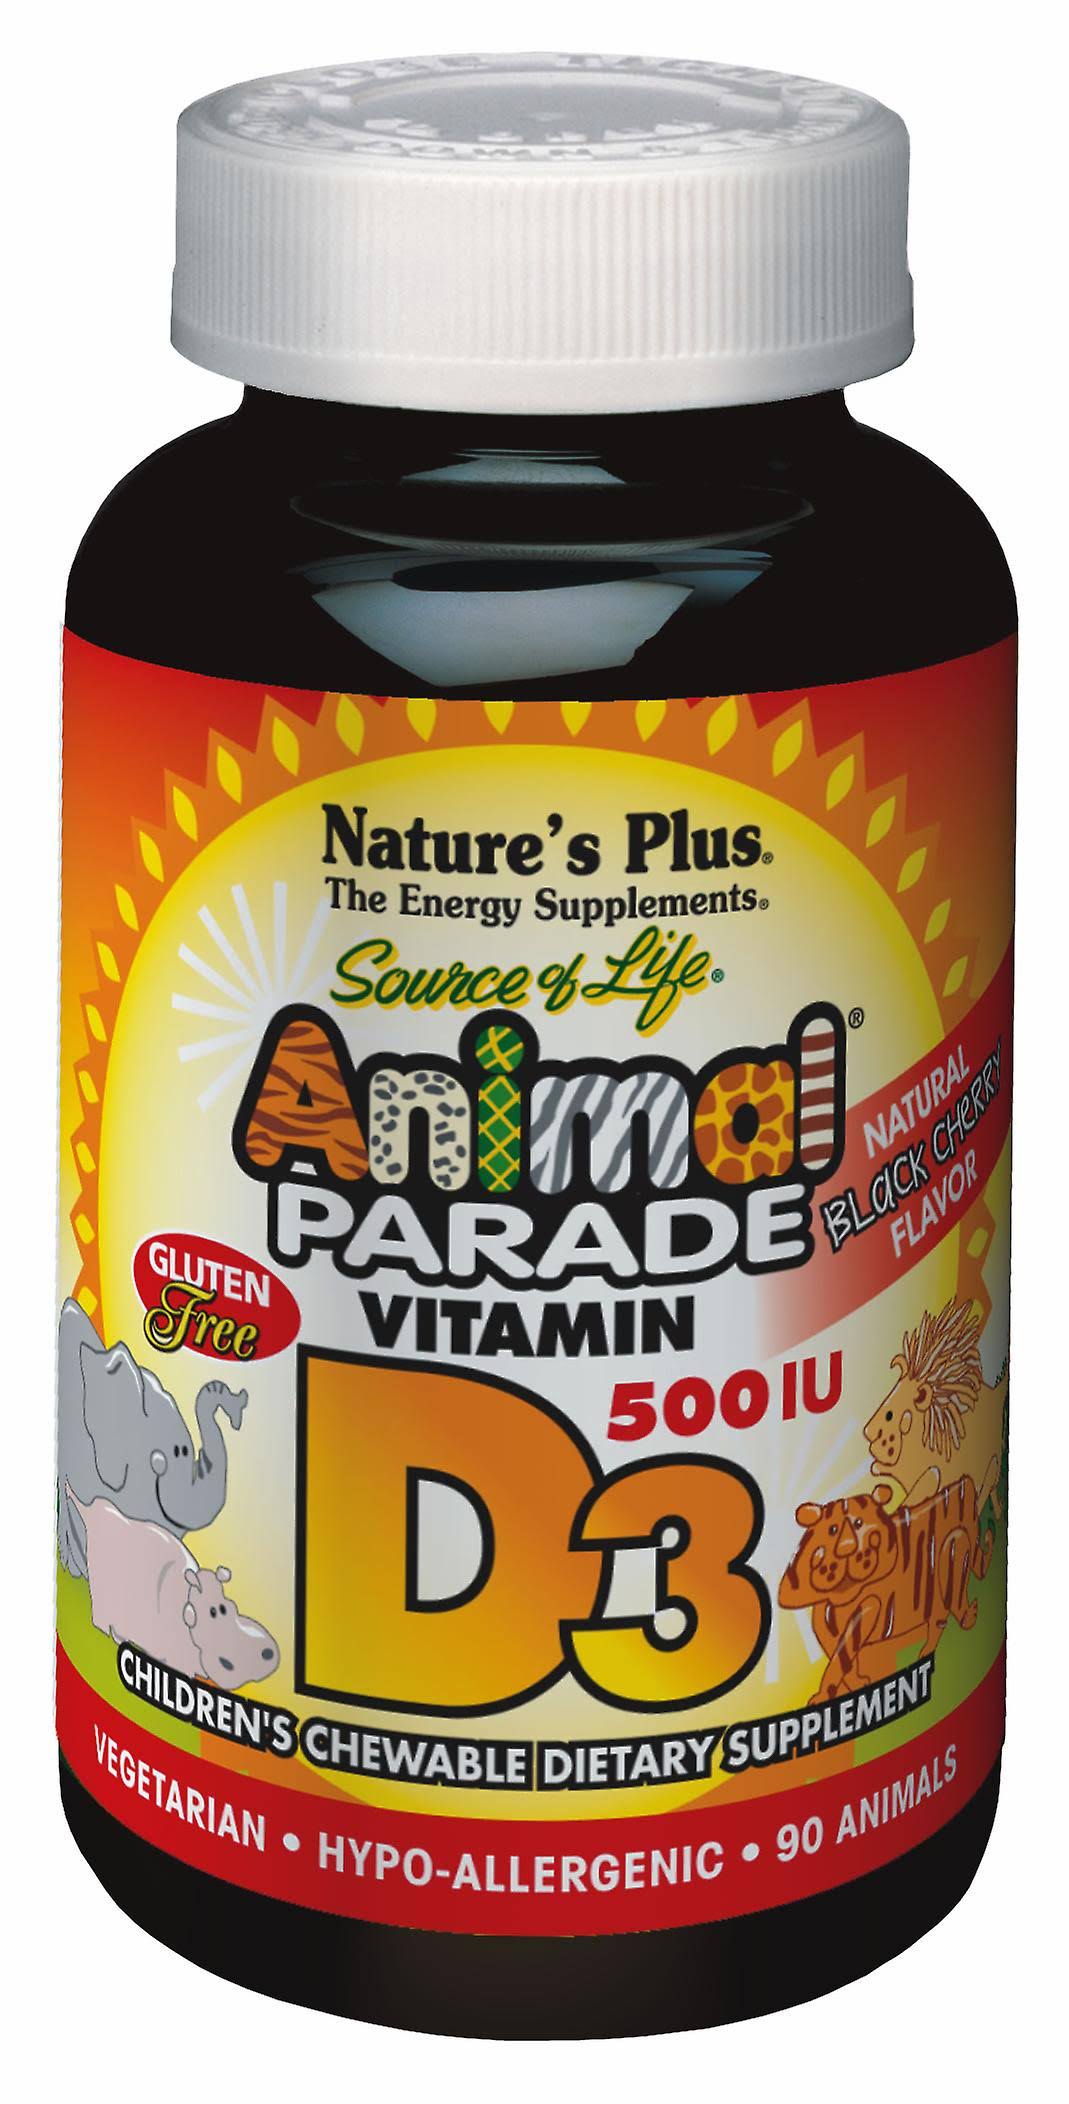 Nature's Plus Animal Parade Vitamin D3 - Black Cherry, x90